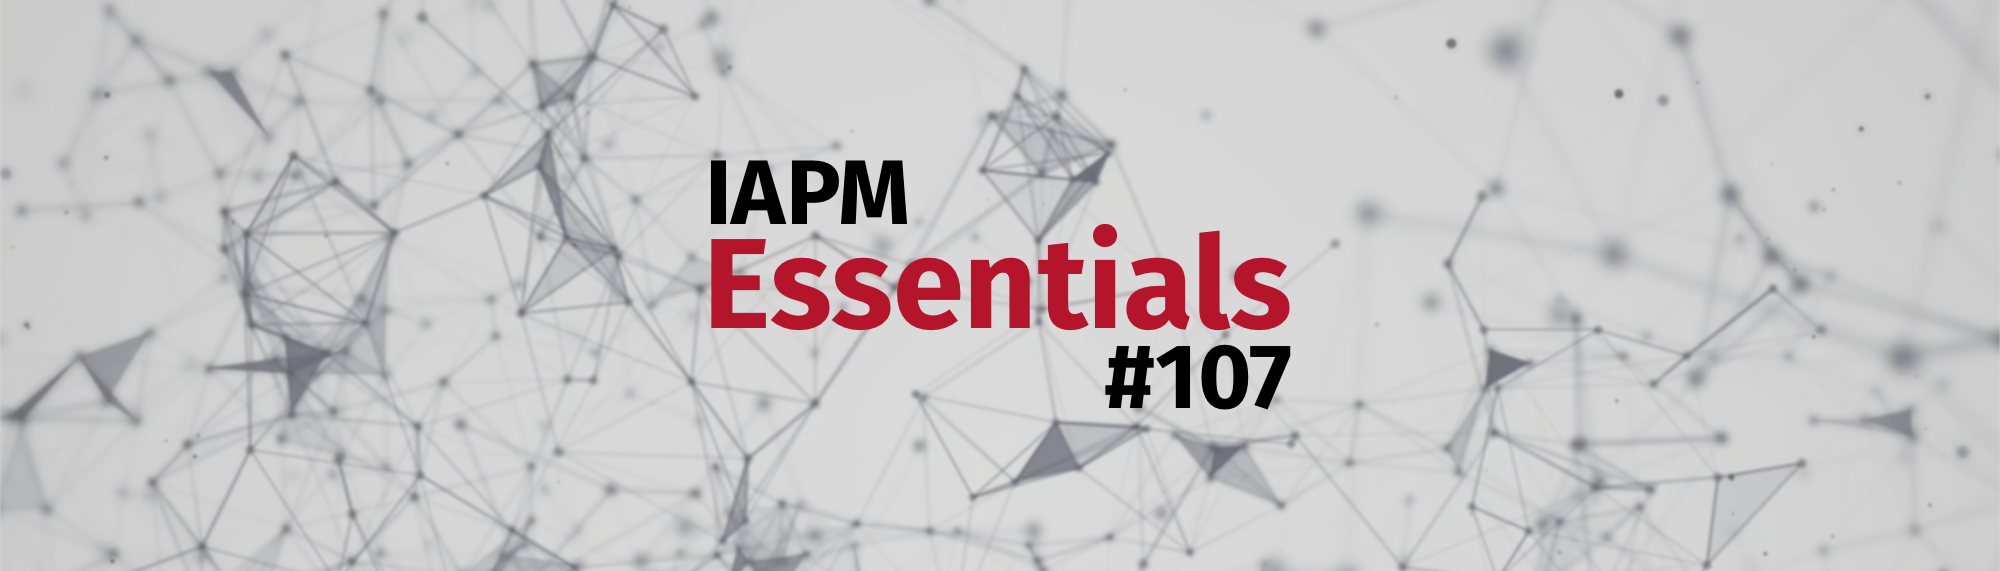 IAPM Essentials #107 - PM Neuigkeiten | IAPM